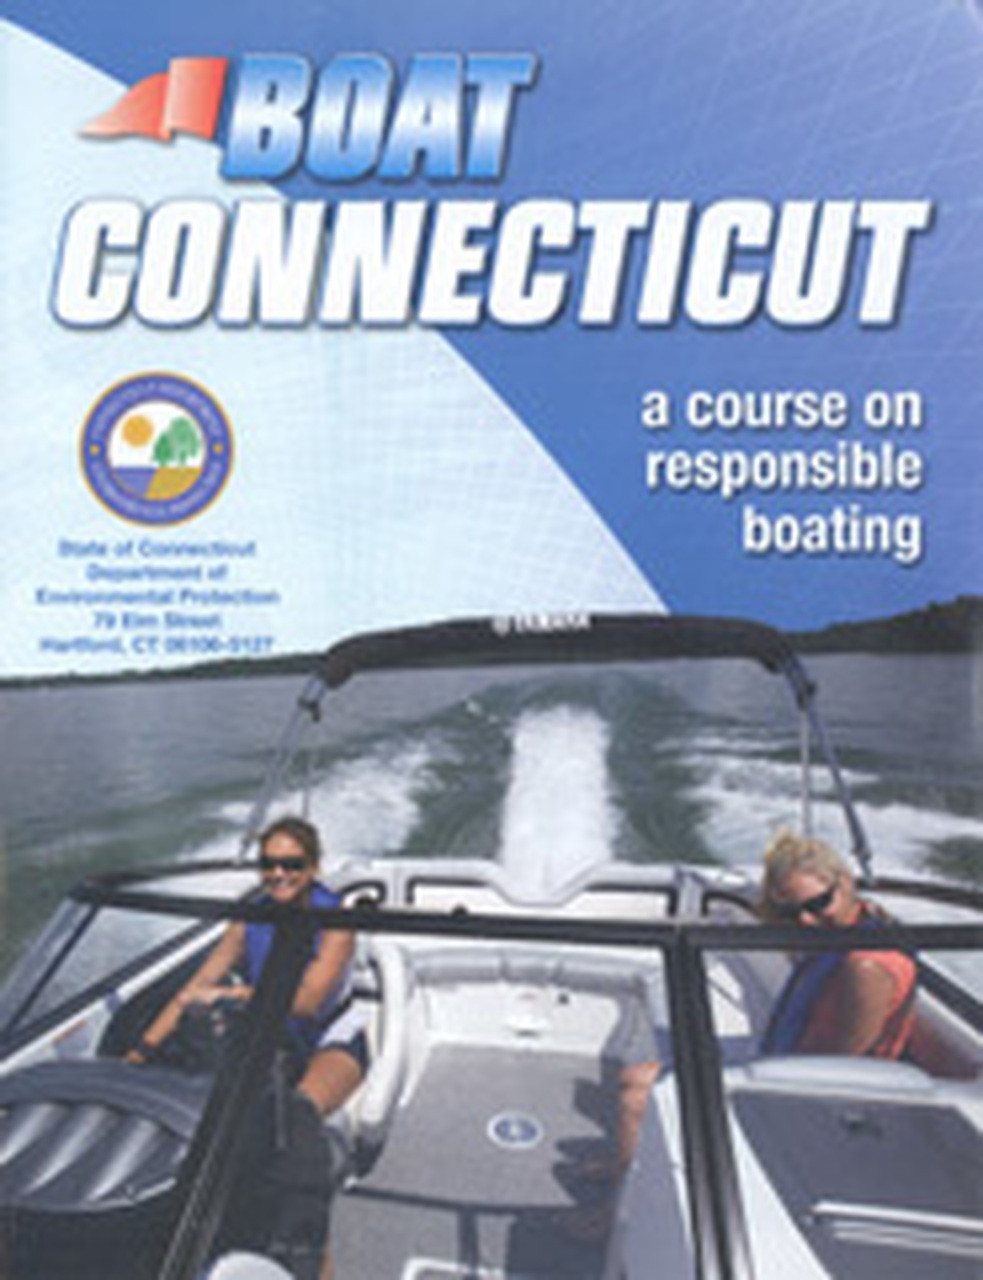 CT Boating & PWC Class, June 4, 2023, 10AM-6PM in E. Hartford, CT